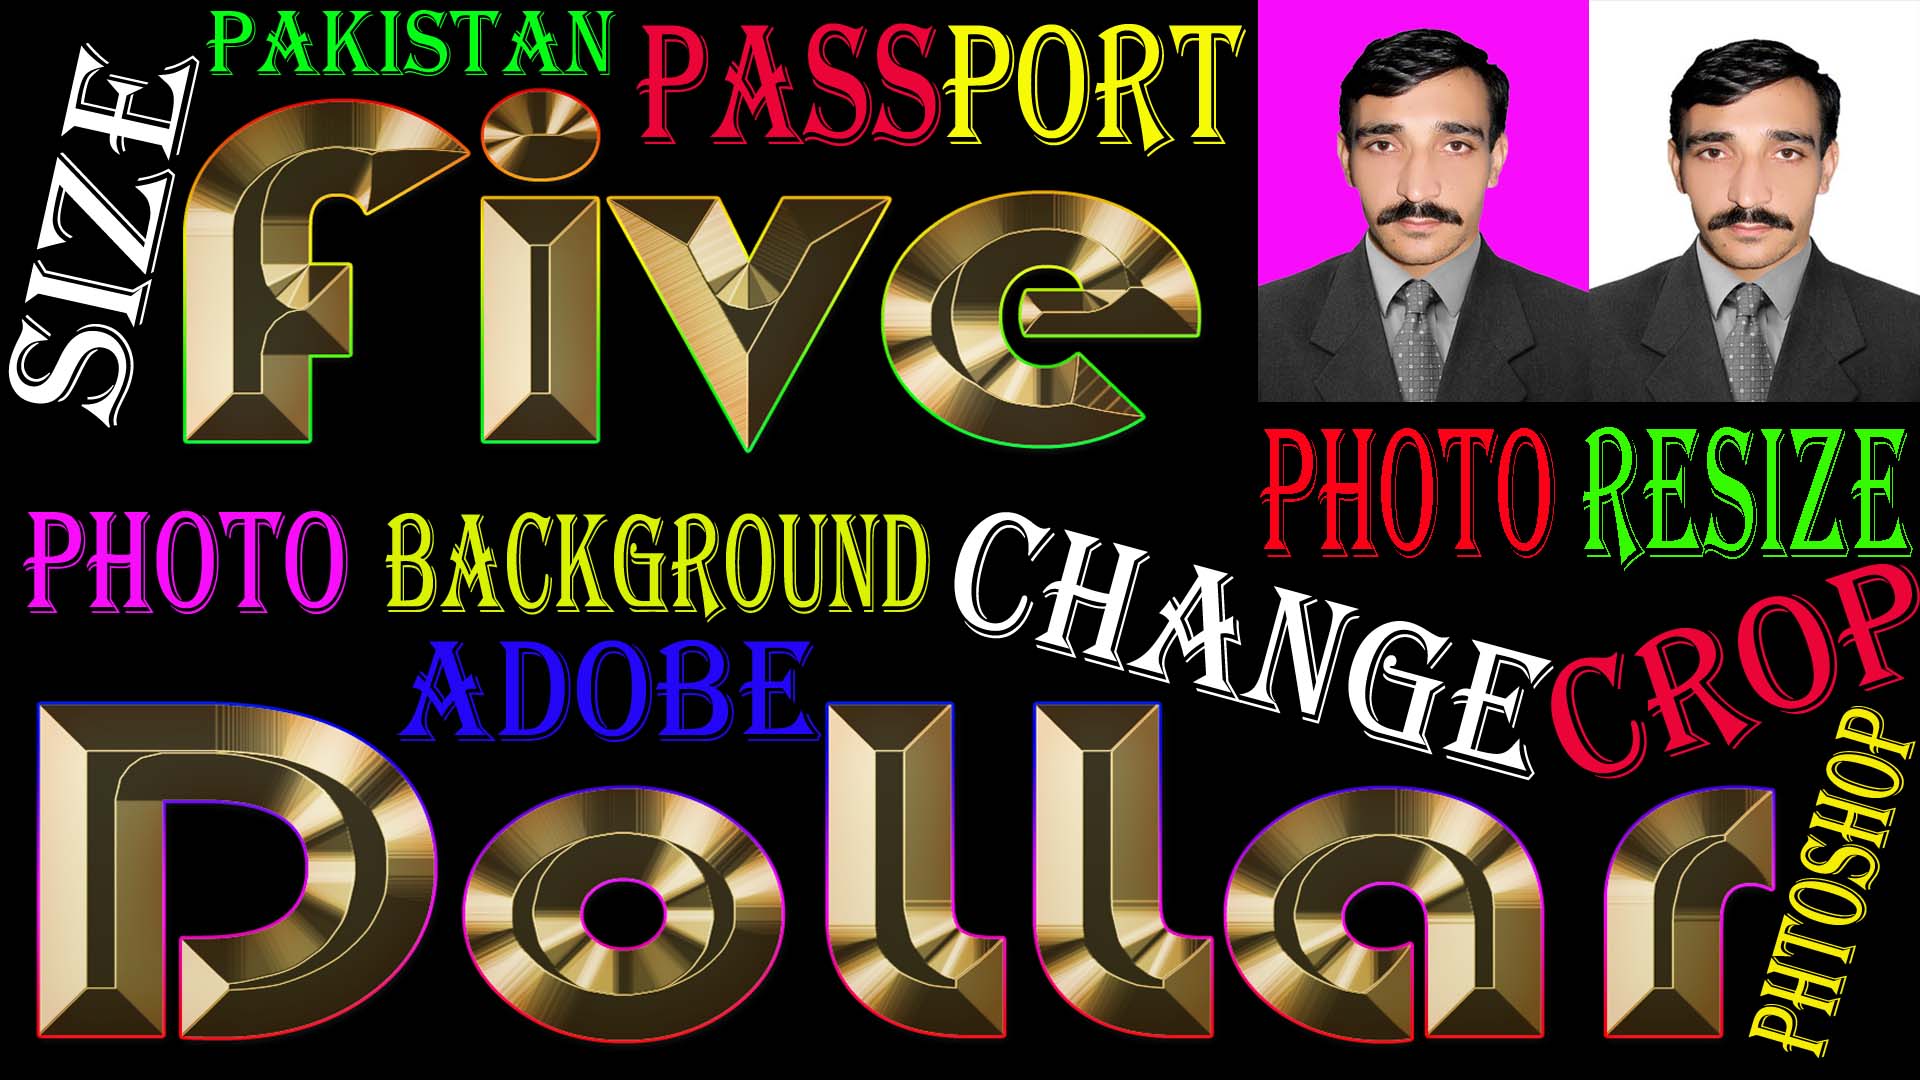 Background remove change resize passport size by Hassanazra | Fiverr